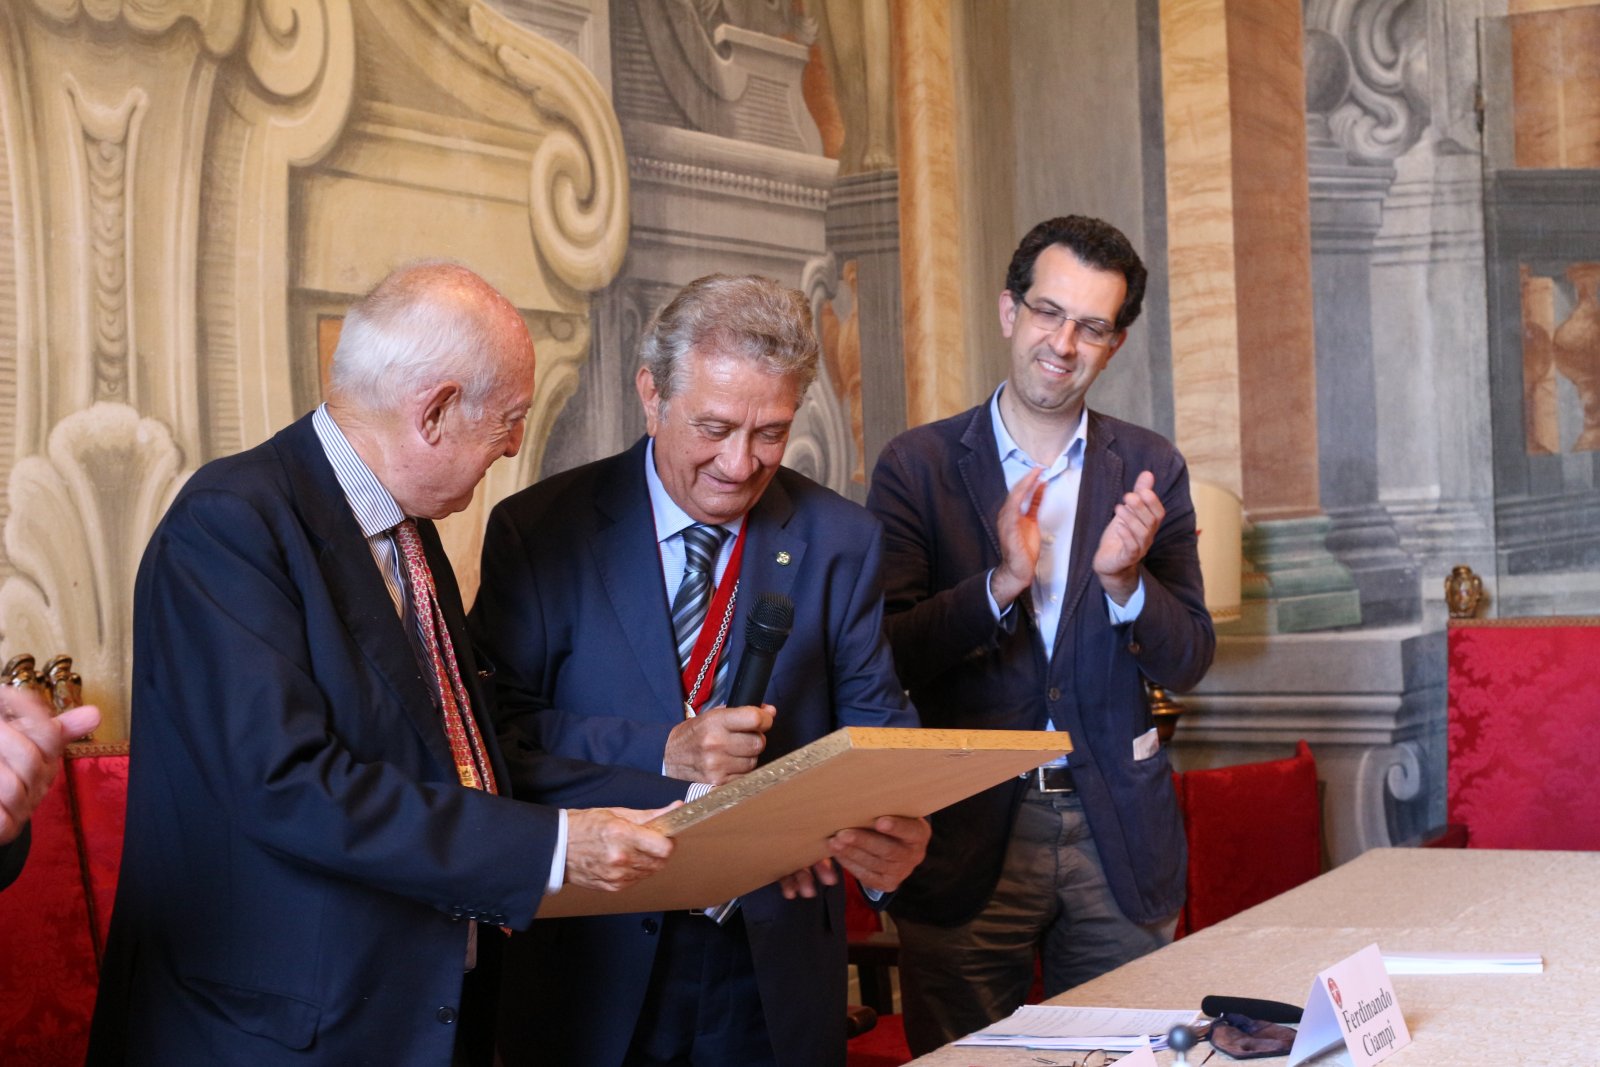 Adalberto Giazotto receives the honour from the Accademia dei Disuniti in Pisa